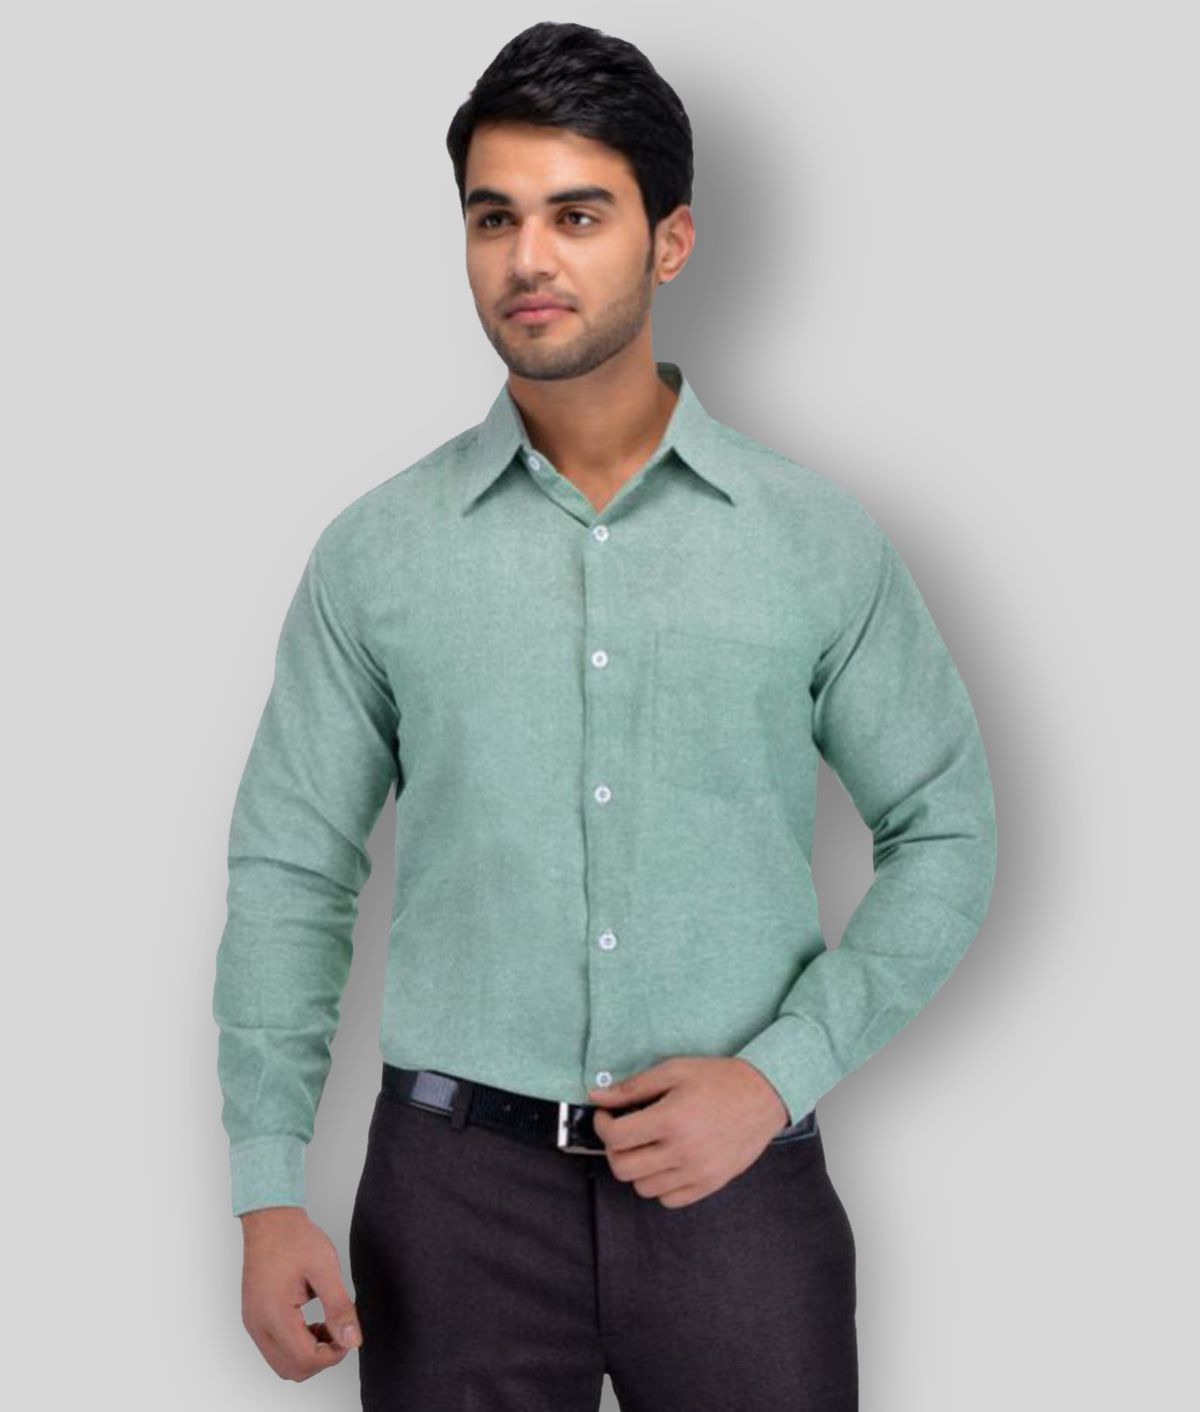     			DESHBANDHU DBK - Green Cotton Regular Fit Men's Formal Shirt (Pack of 1)